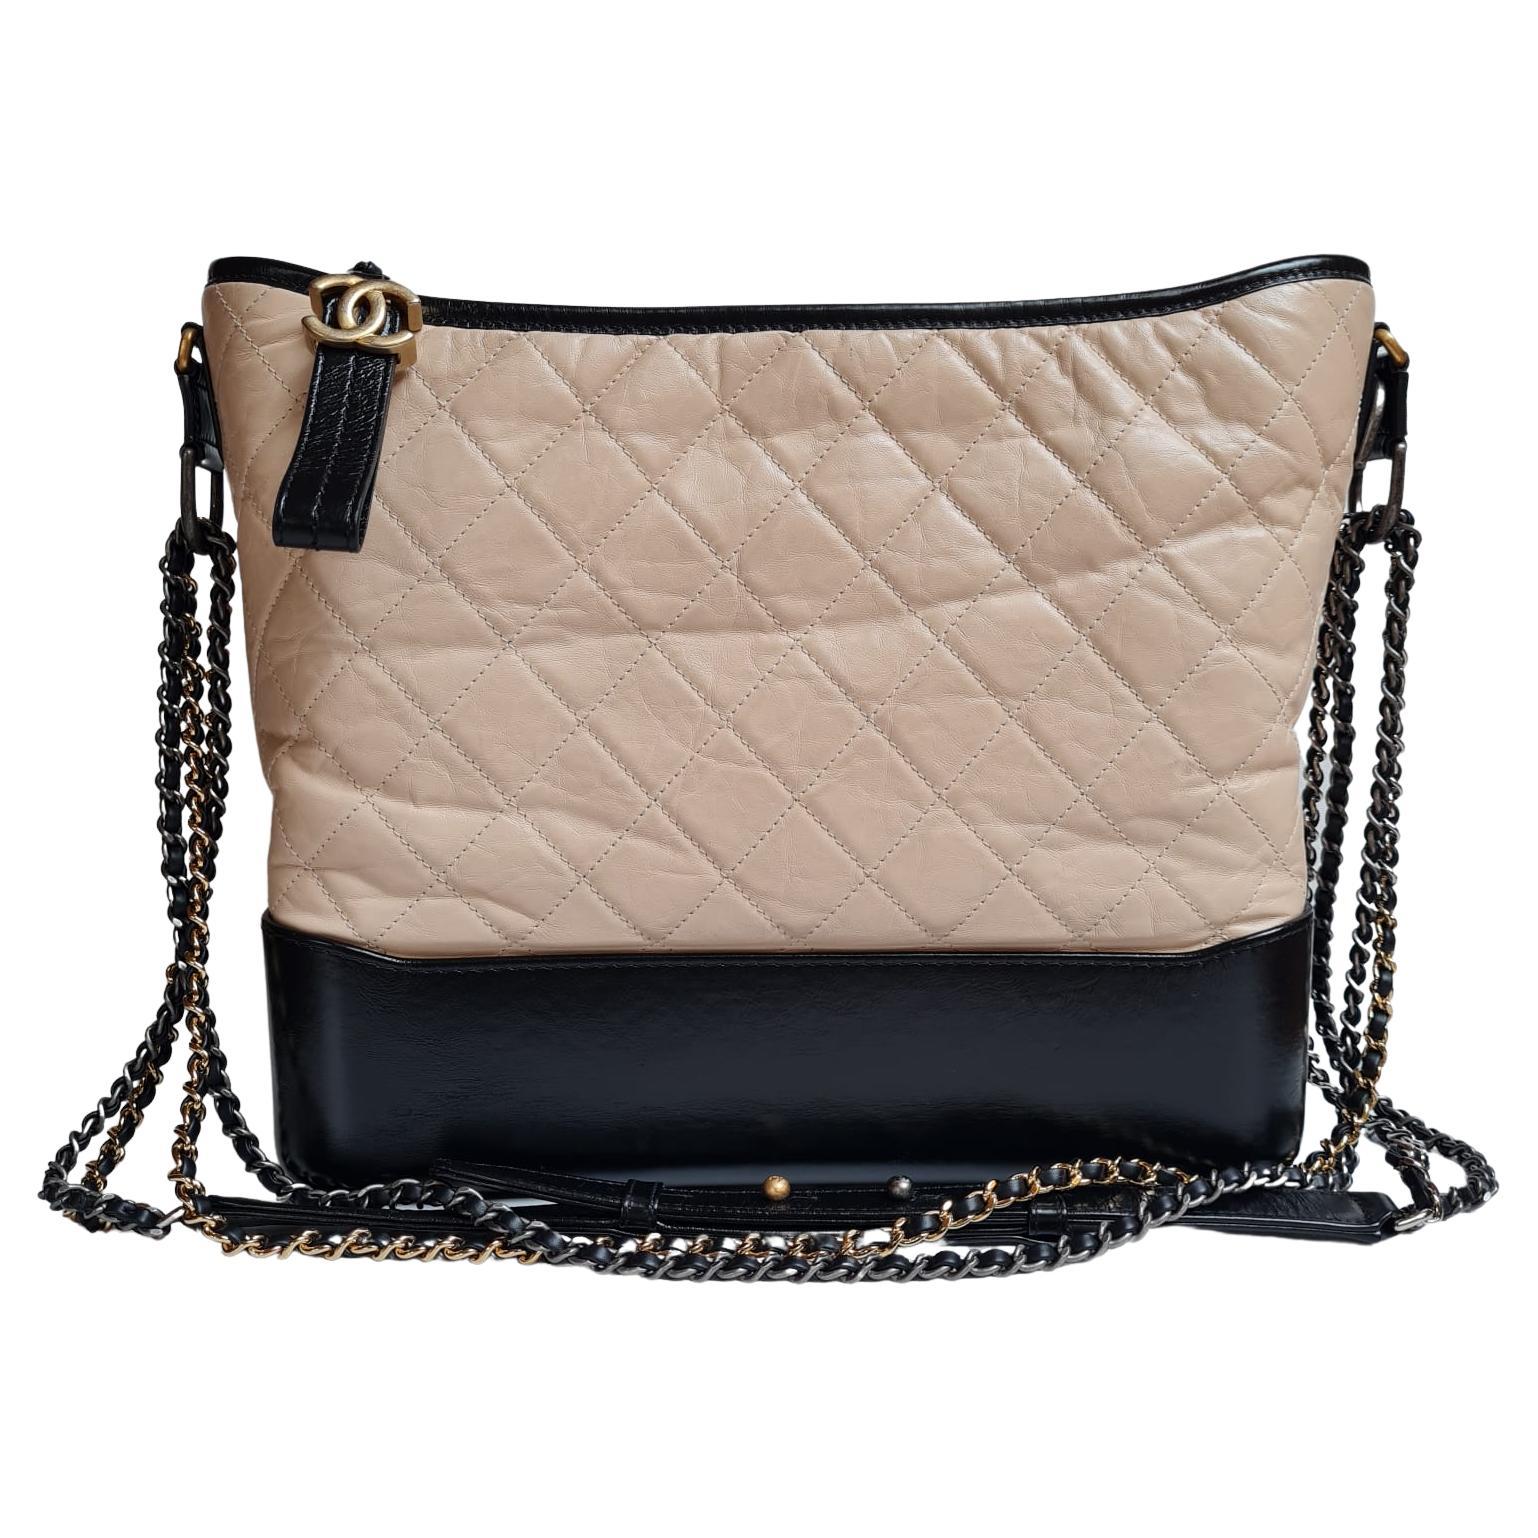 Chanel Large Gabrielle Bag